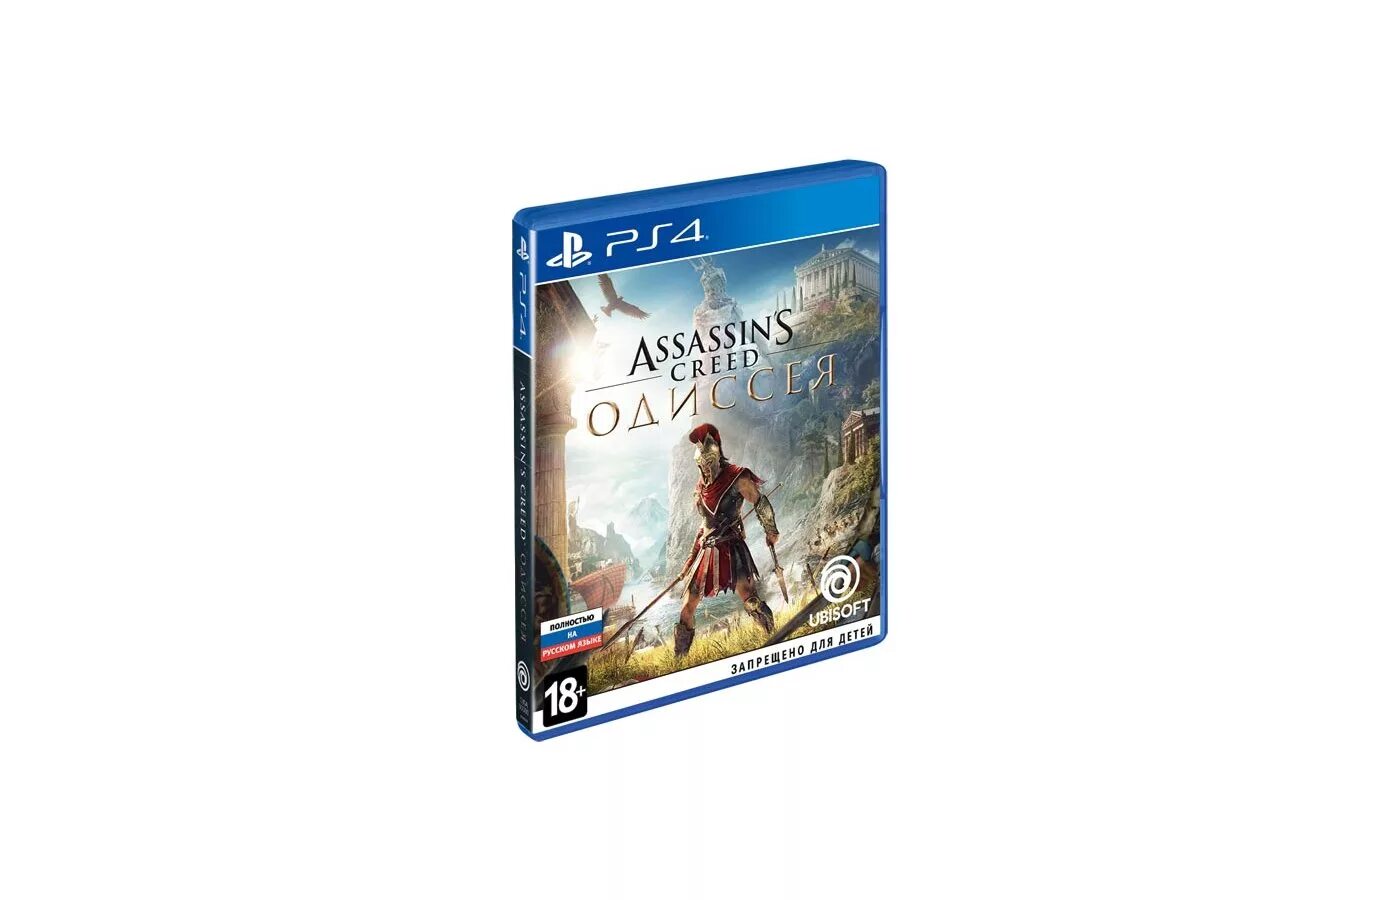 Ассасин Крид Одиссея диск ПС 4. Диск на ПС 4 ассасин Крид Odyssey. Assassin's Creed Одиссея ps4. Ps4 диск Assassins Creed. Игра assassins creed ps4